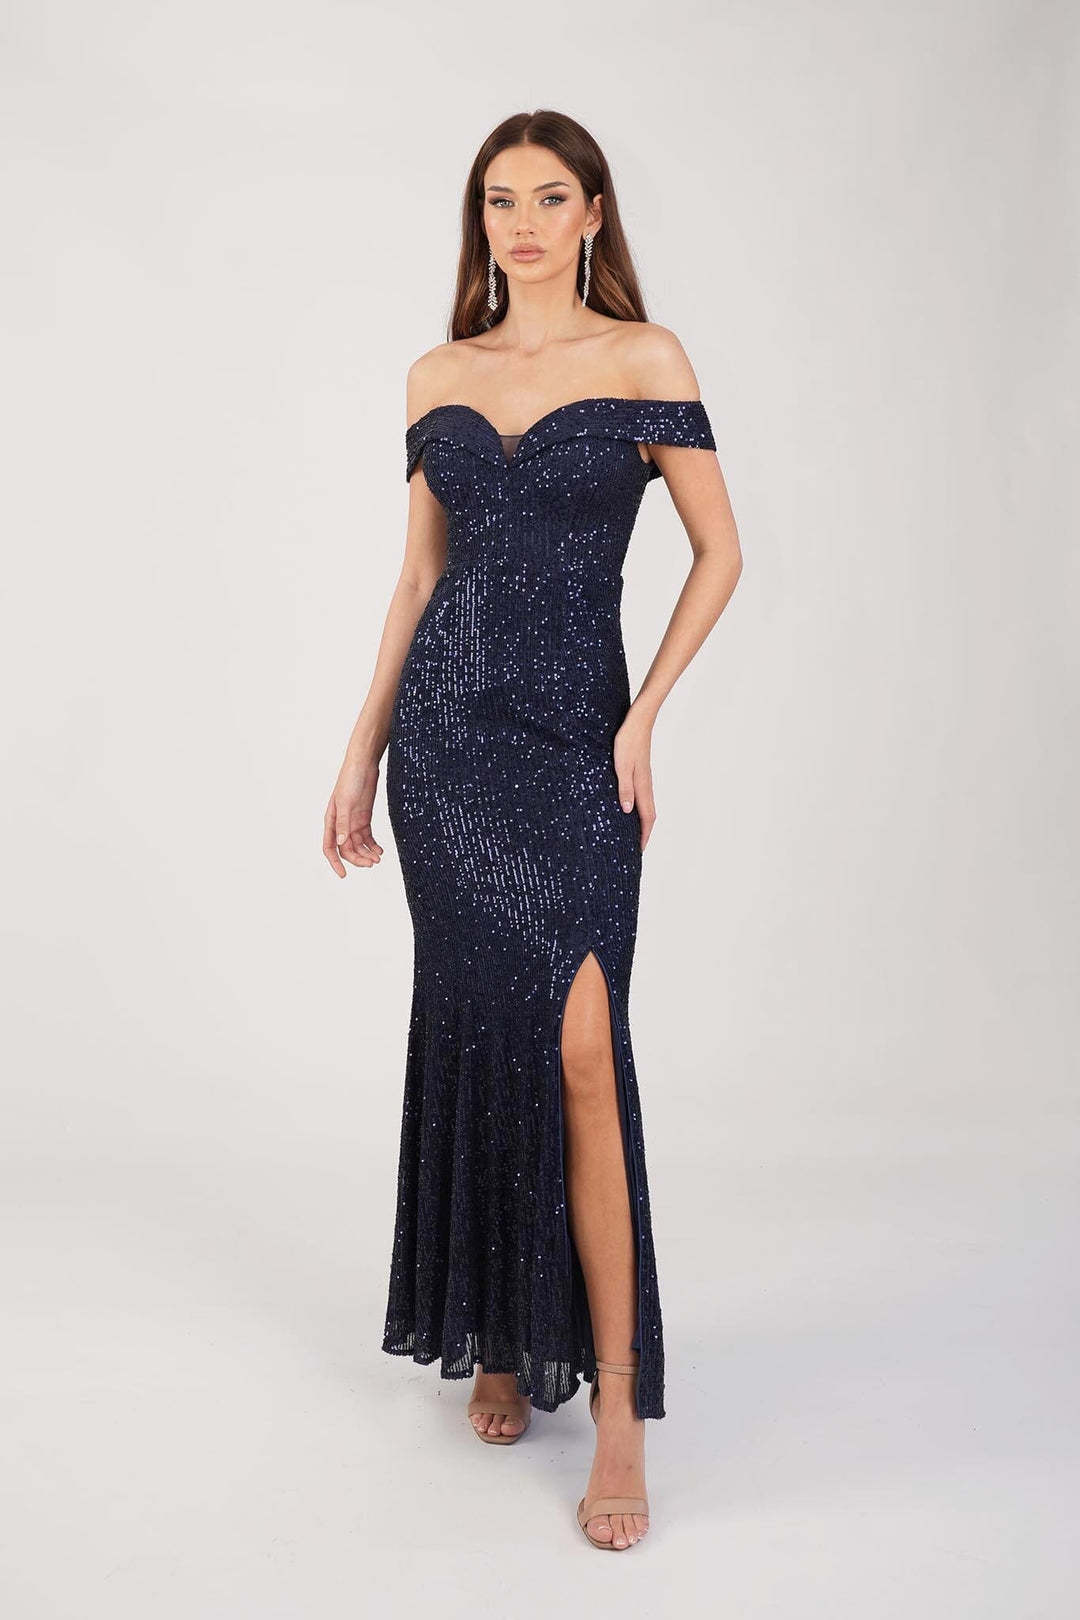 Formal Dresses Australia | Sparkly Formal Dresses | Noodz Boutique ...